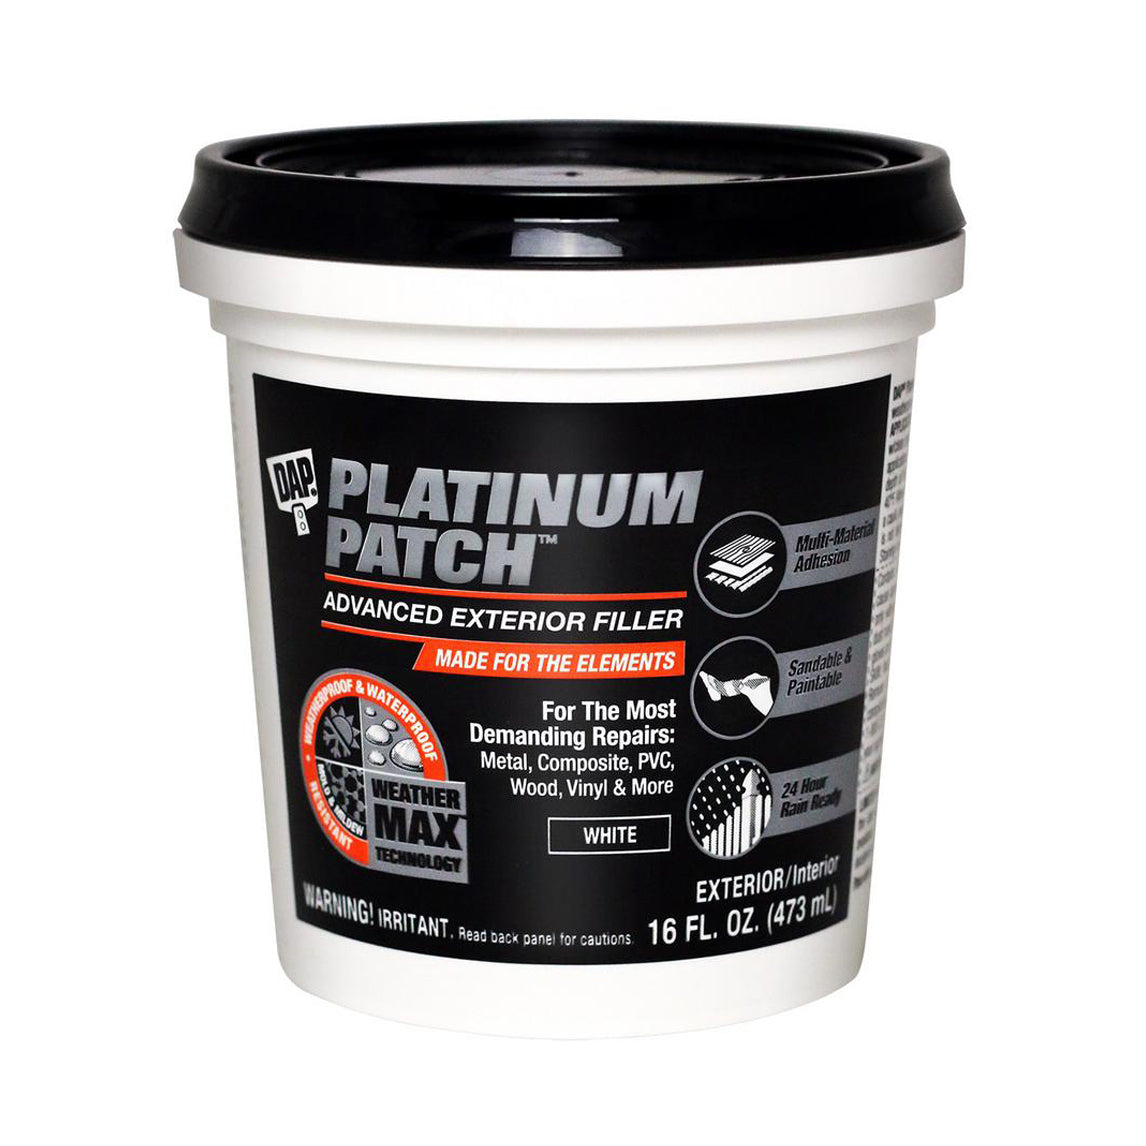 DAP Platinum Patch Advanced Exterior Filler Tub